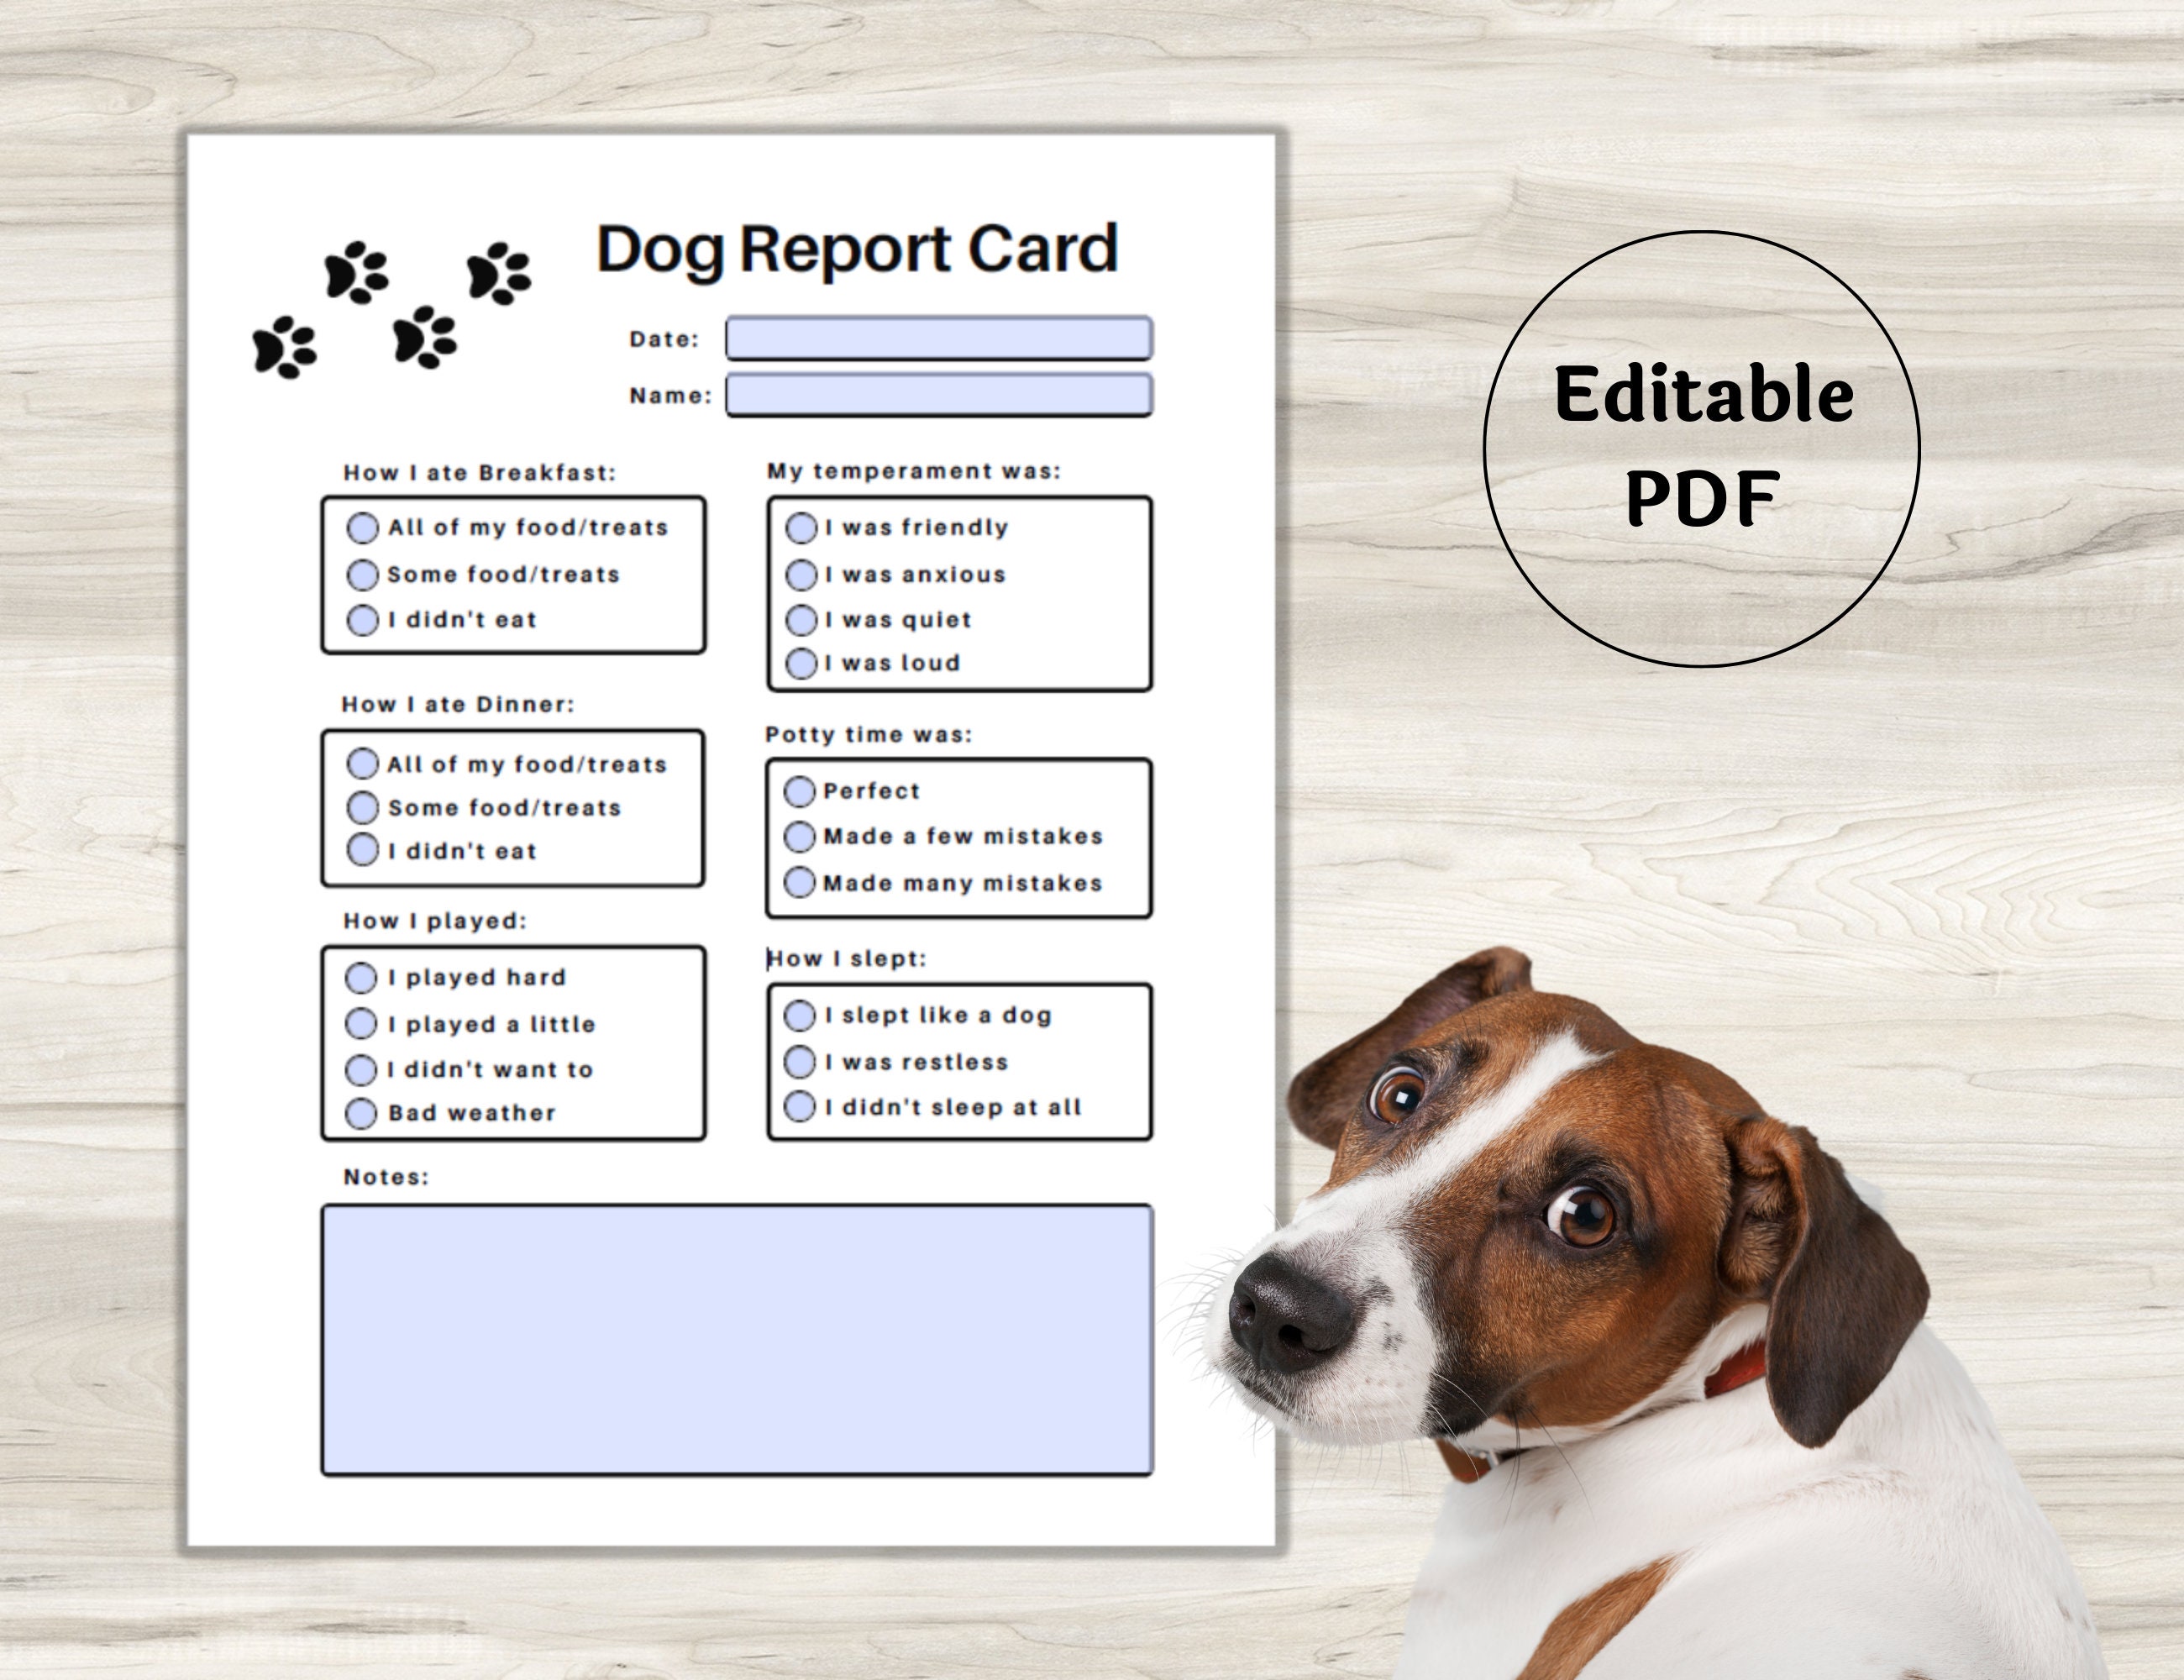 doggy-daycare-report-card-ubicaciondepersonas-cdmx-gob-mx